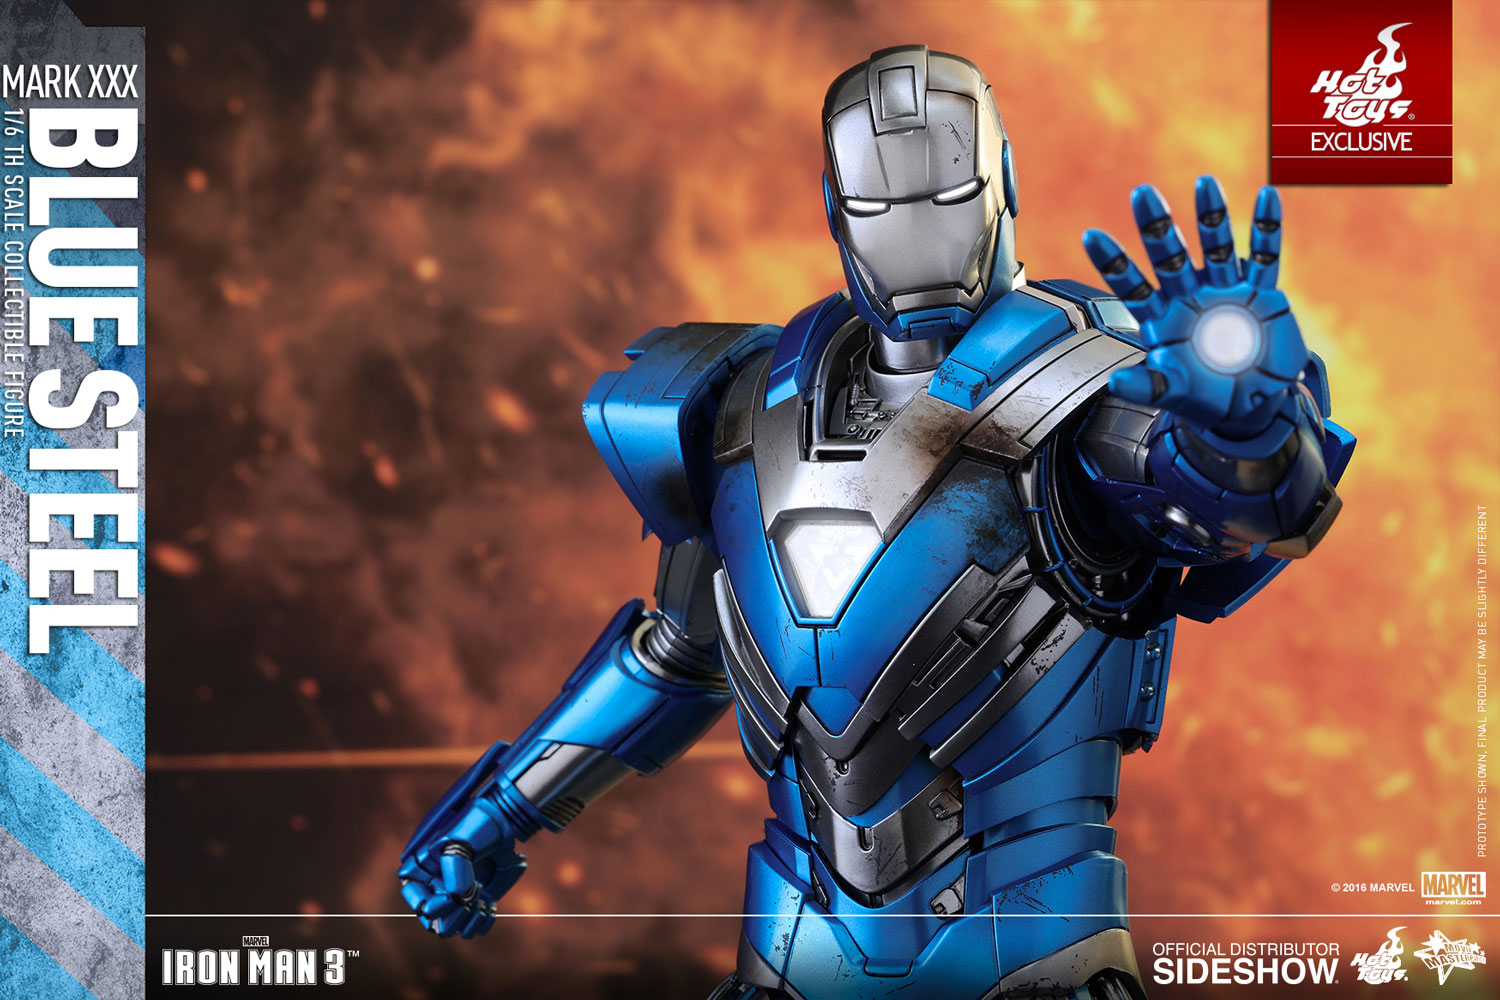 Iron Man Mark XXX - Blue Steel Exclusive Edition - Prototype Shown